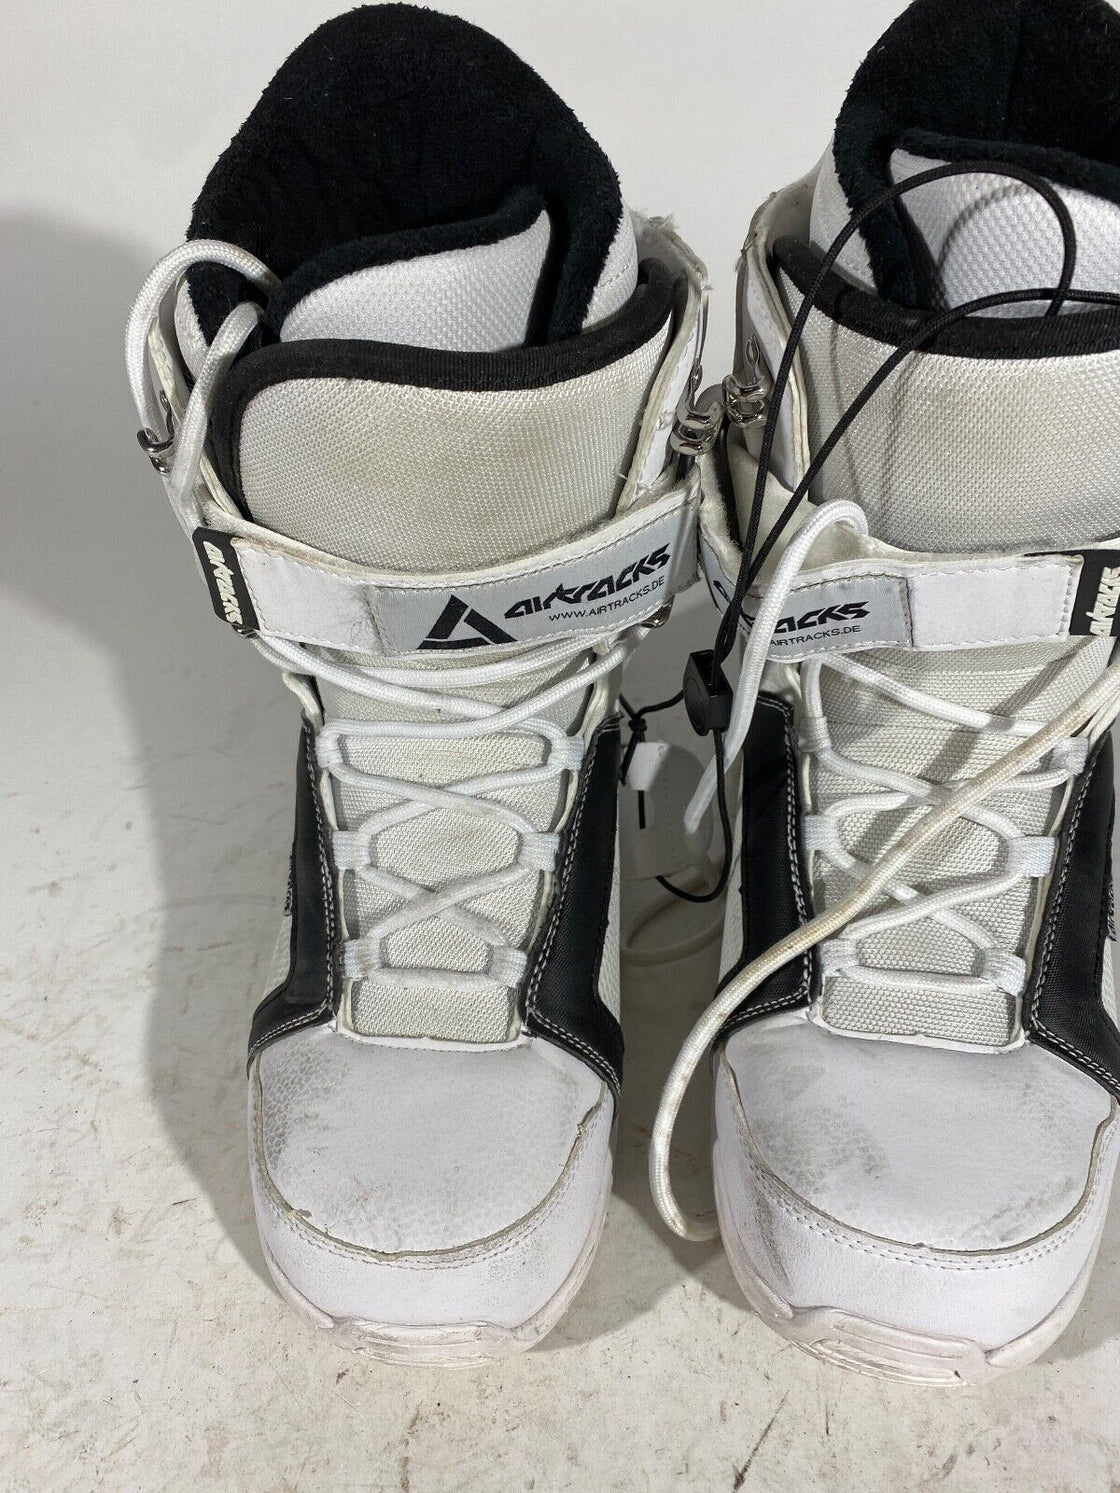 AIRTRACKS Snowboard Boots Ladies Size EU41, US9, UK8, Mondo 262 mm